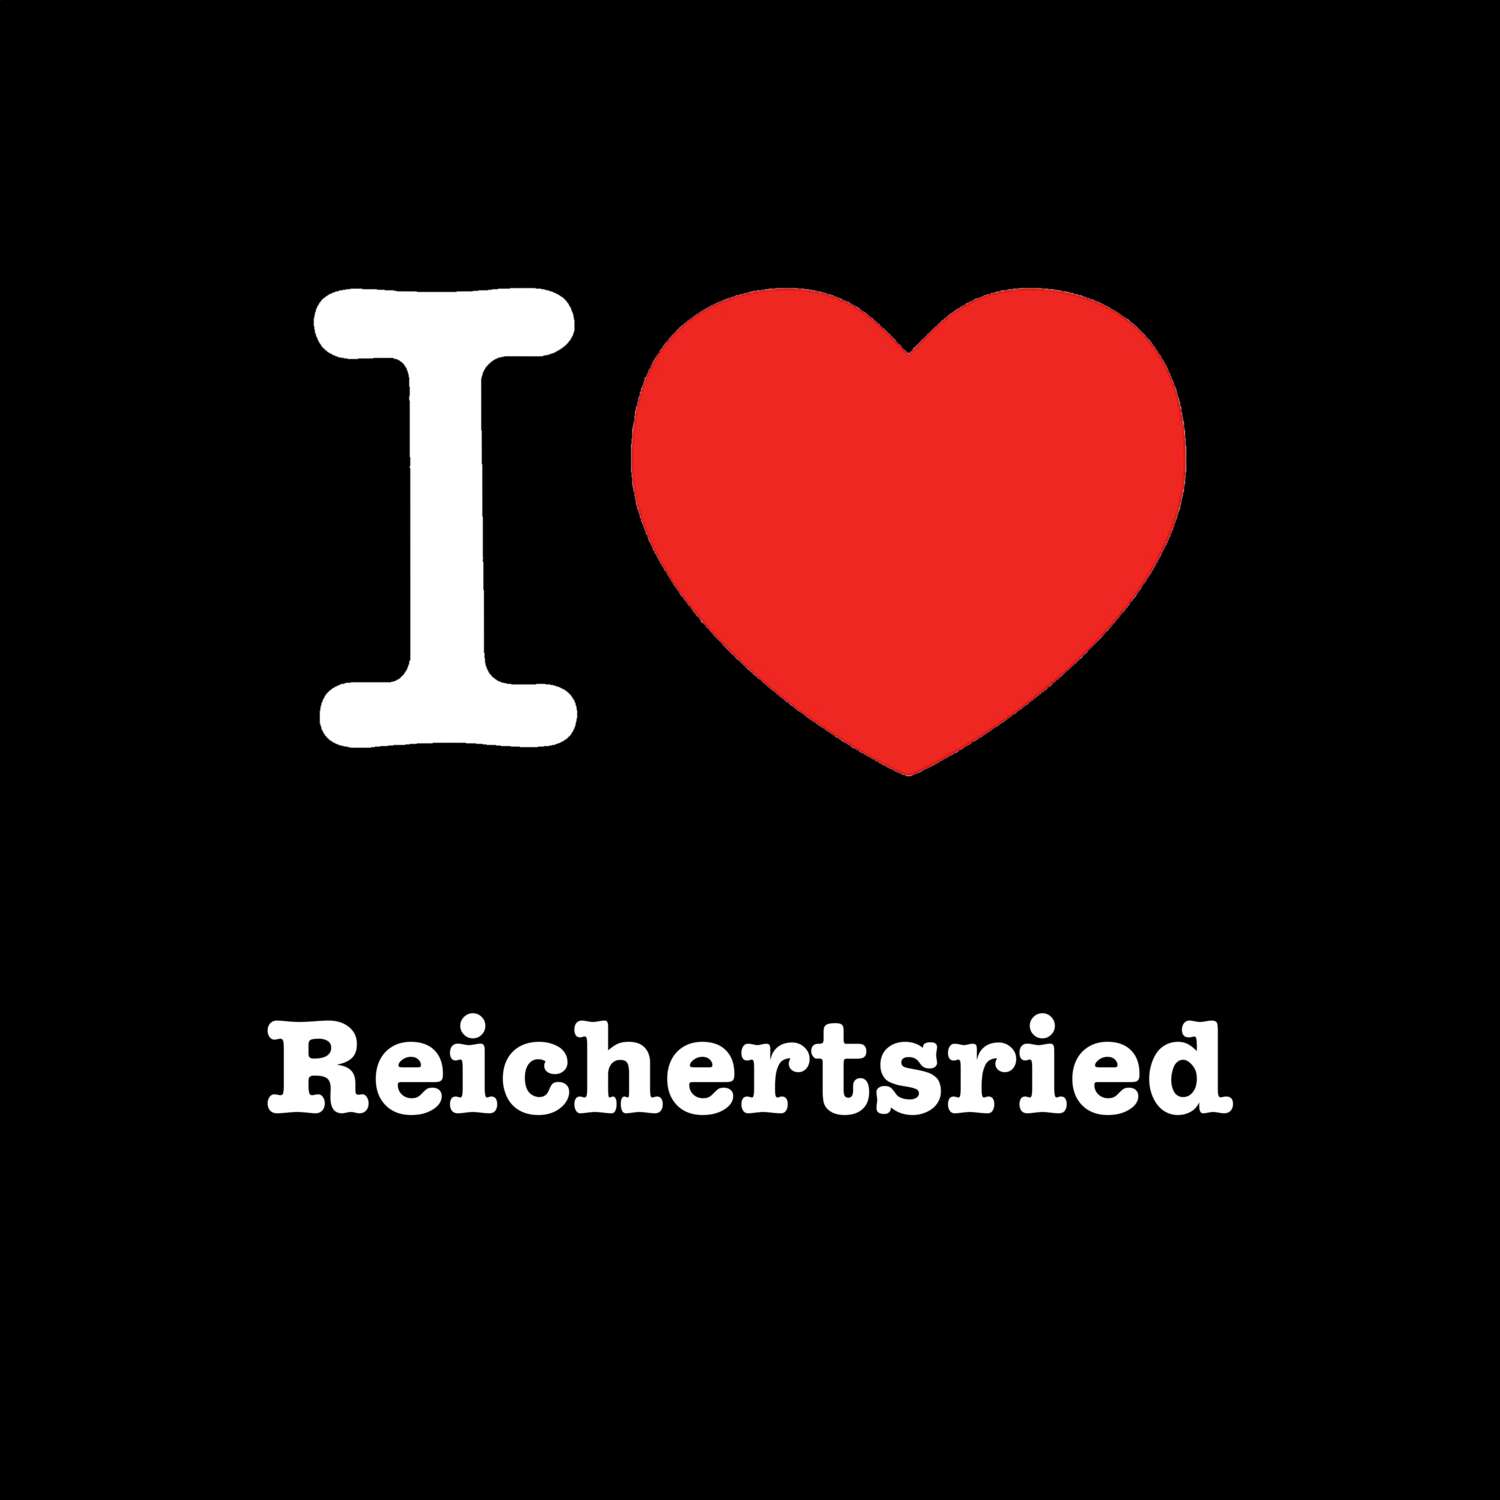 Reichertsried T-Shirt »I love«